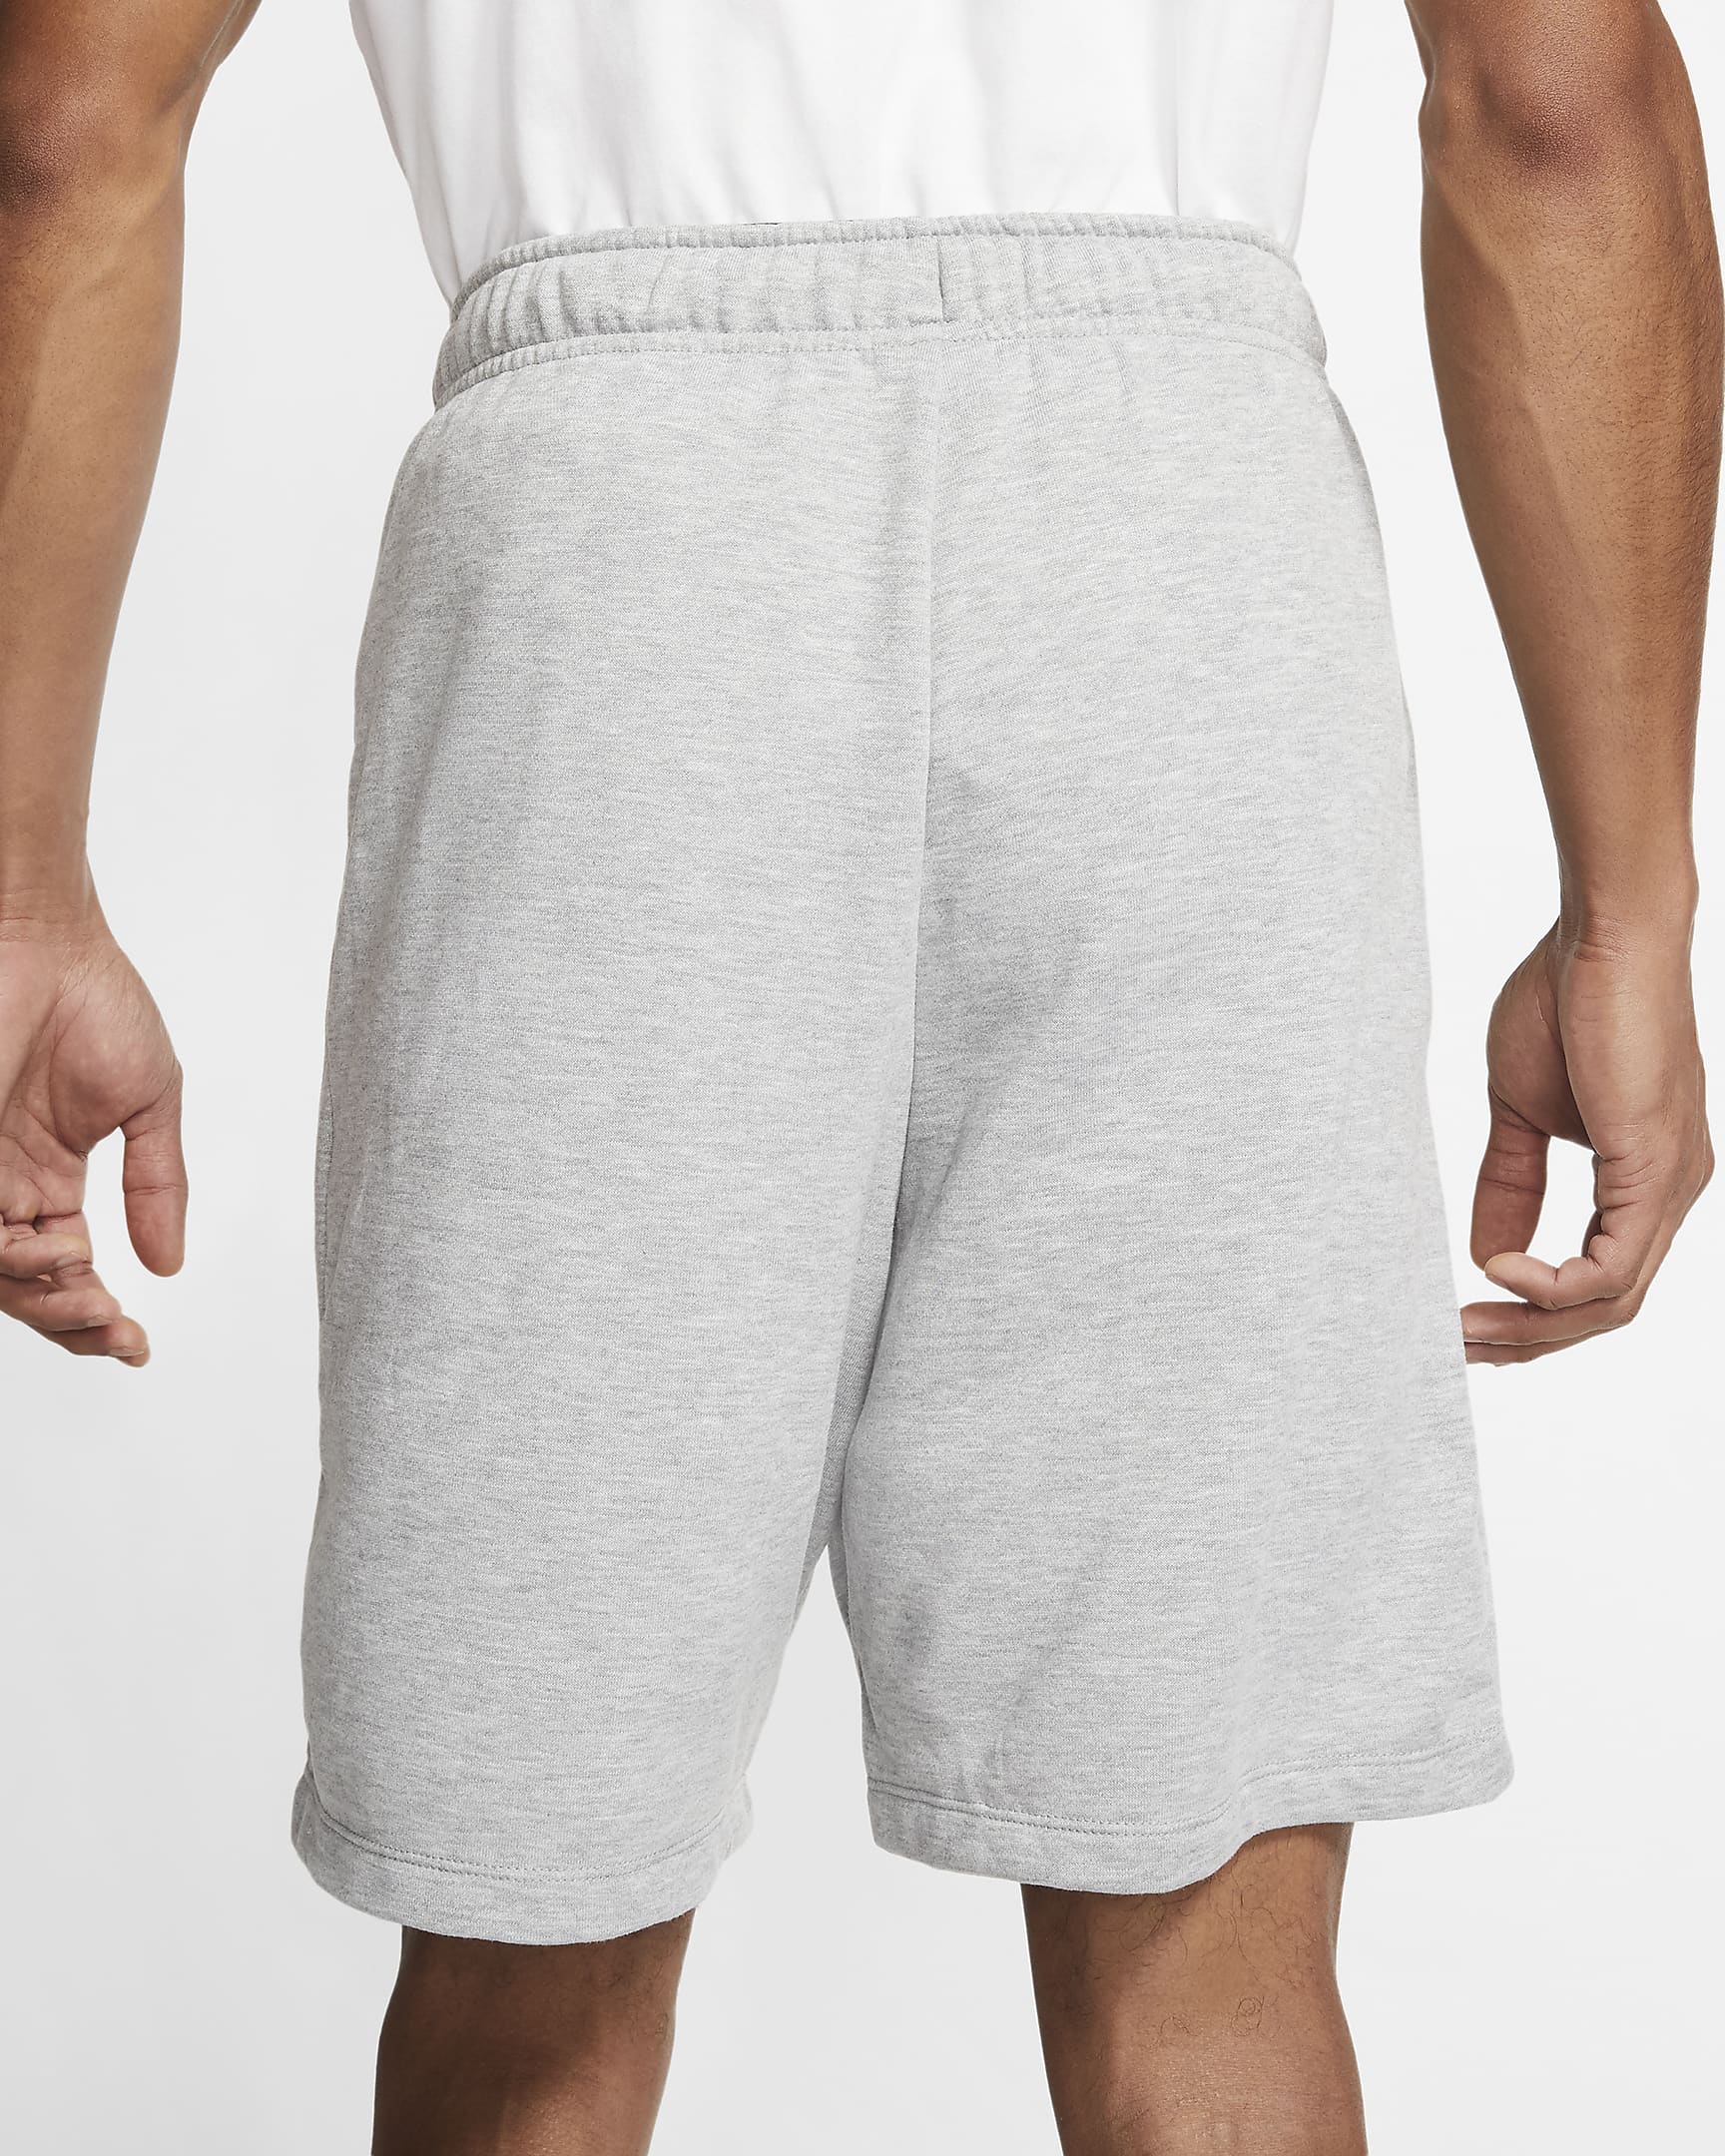 Nike Dri-FIT Men's Fleece Training Shorts - Dark Grey Heather/Black